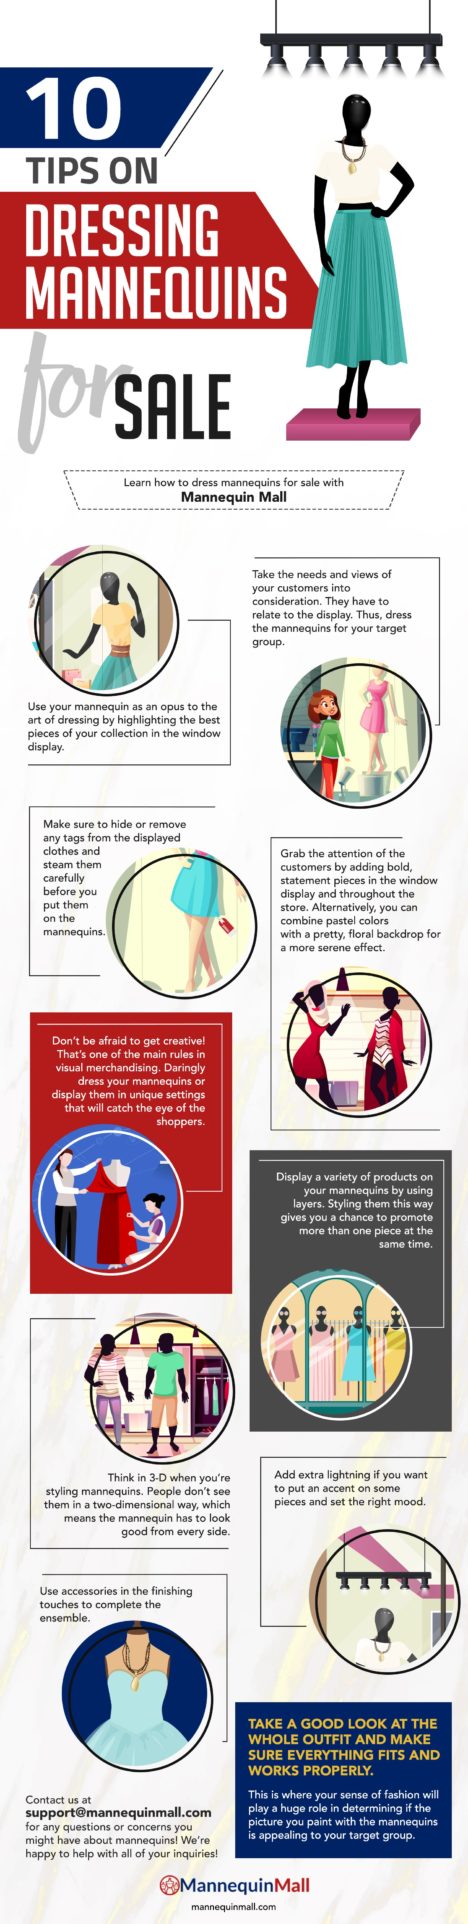 Top 10 Tips on Dressing Mannequins